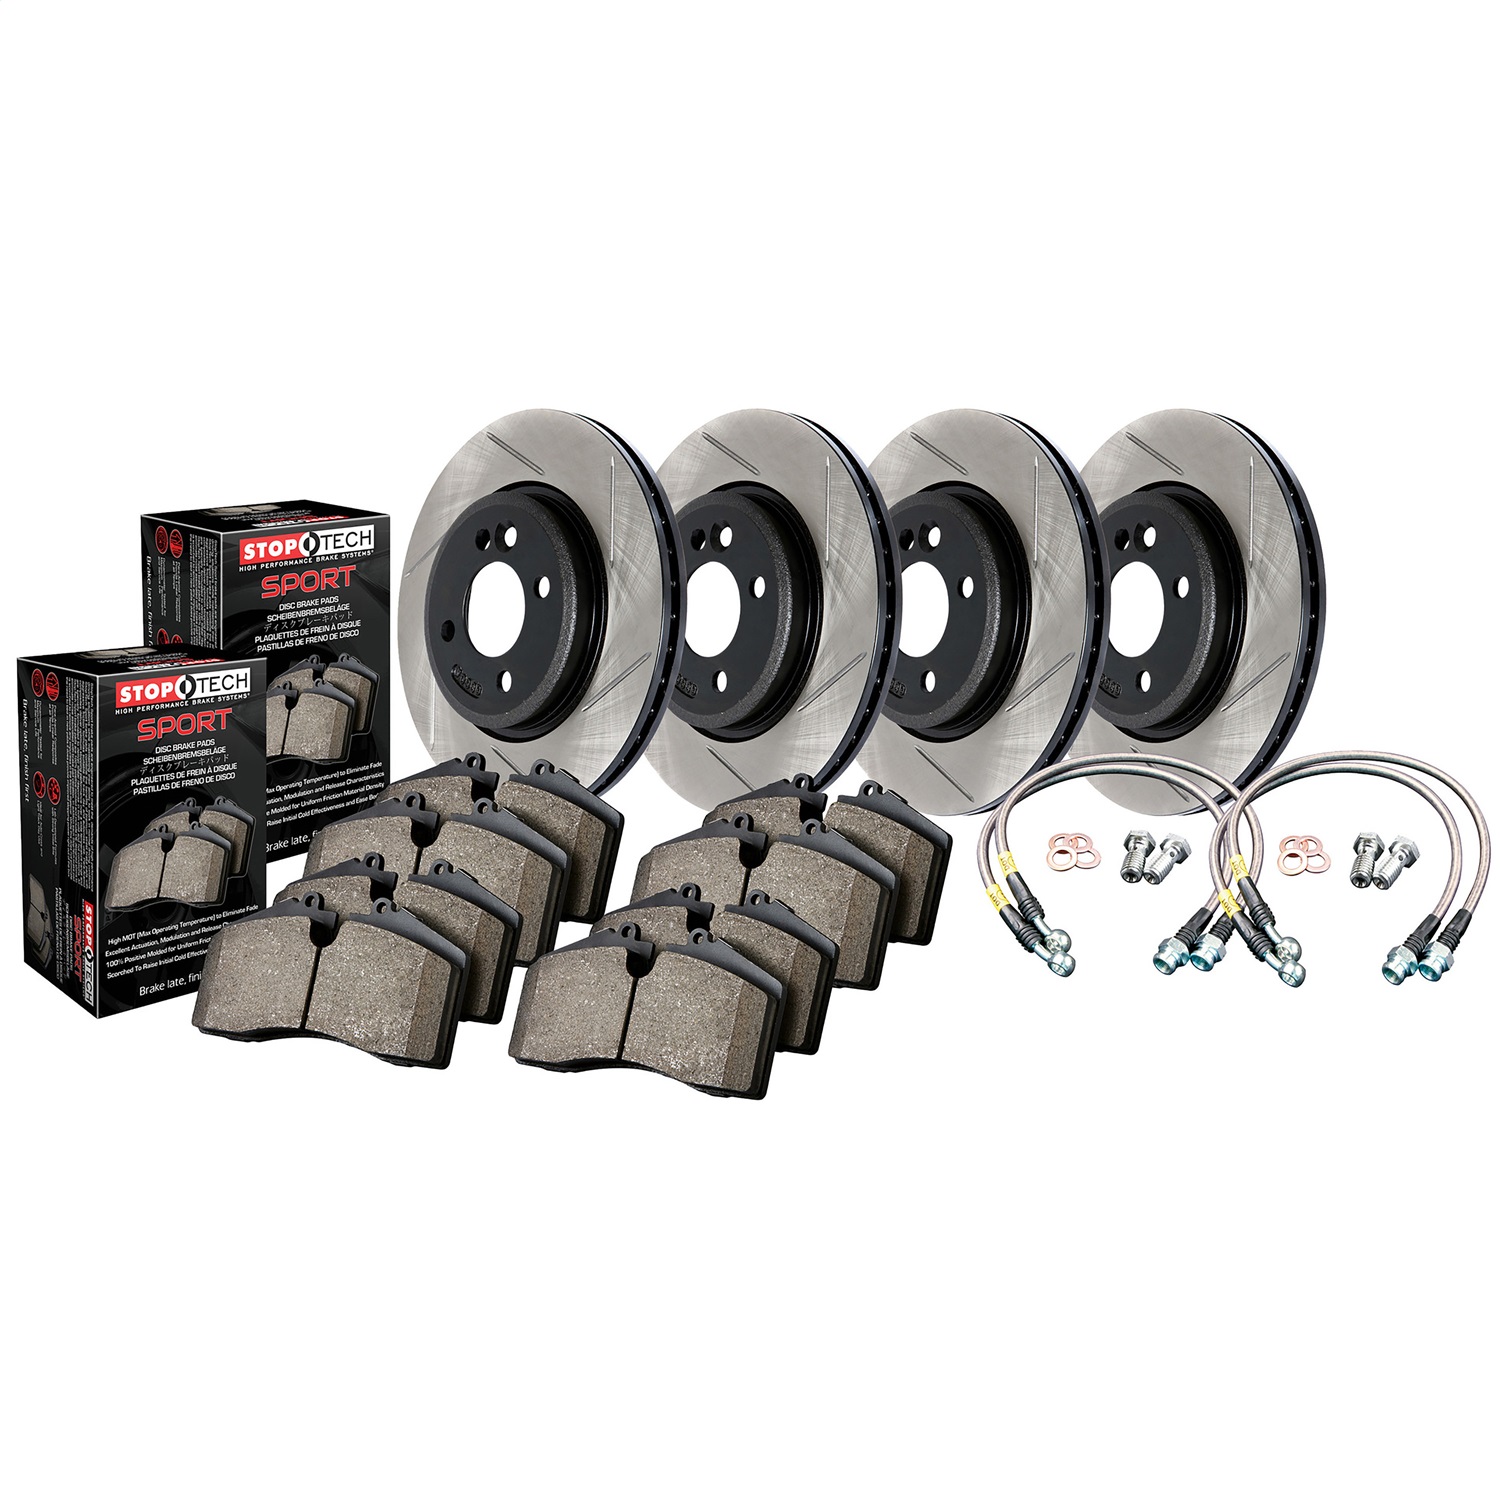 StopTech 977.47004 Sport Disc Brake Kit w/Slotted Rotors Fits 98-01 Impreza